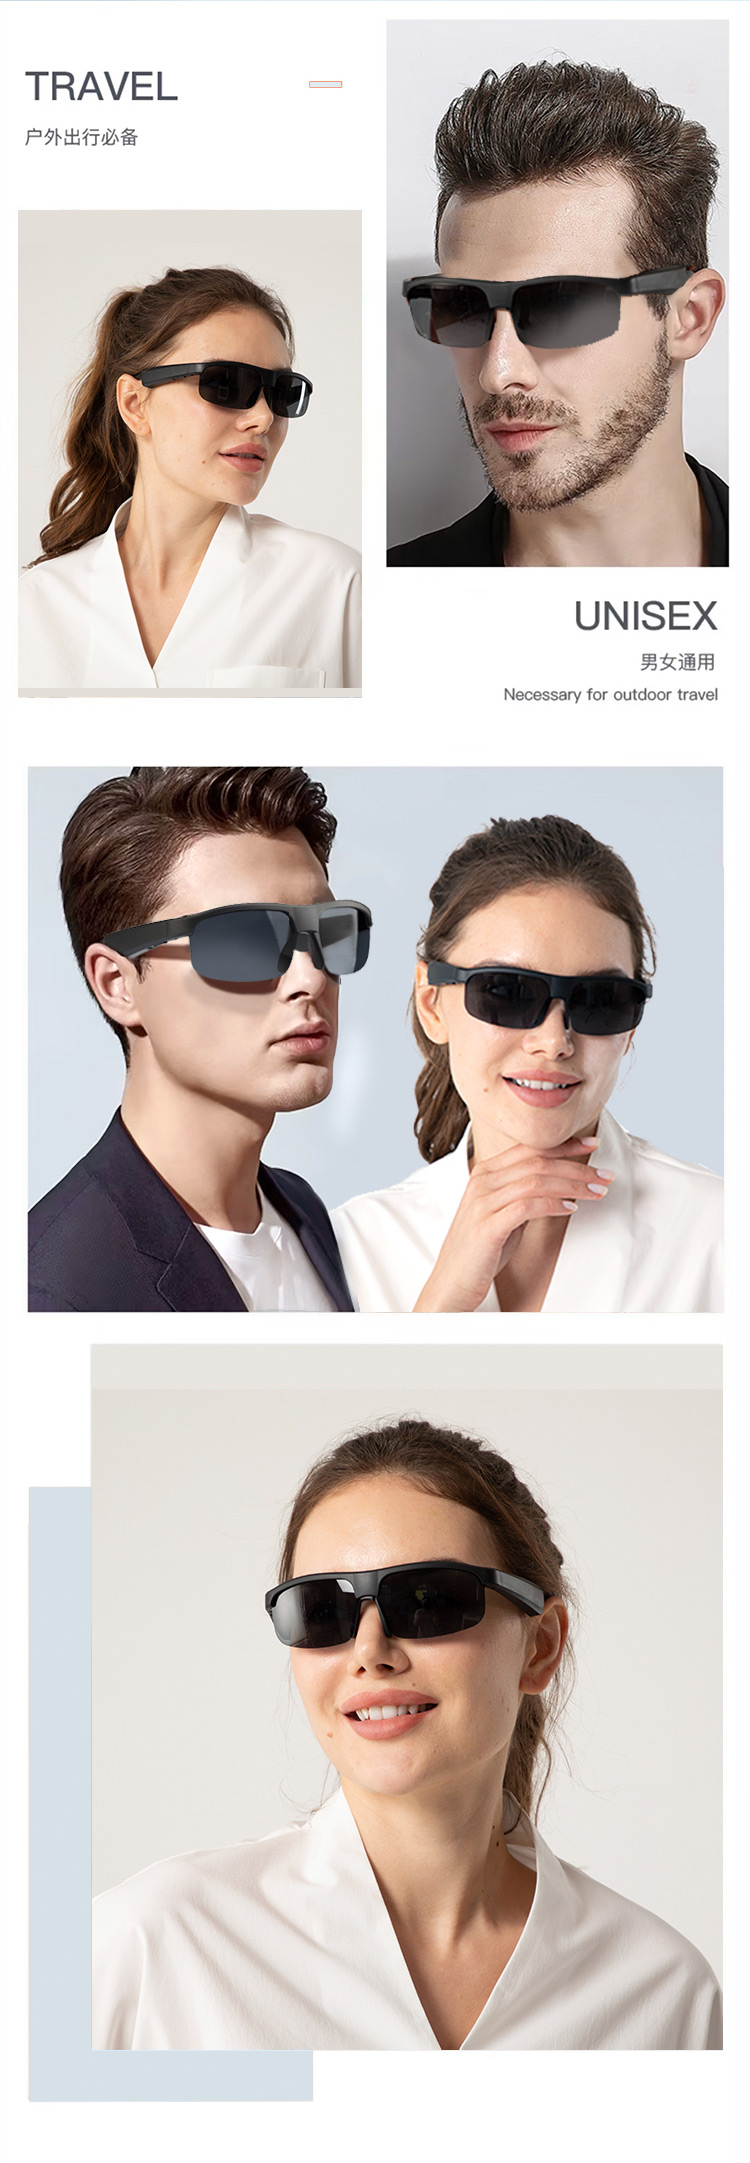 M6 Pro 智能蓝牙耳机眼镜 集电话音乐眼镜于一体 防紫外线详情图7